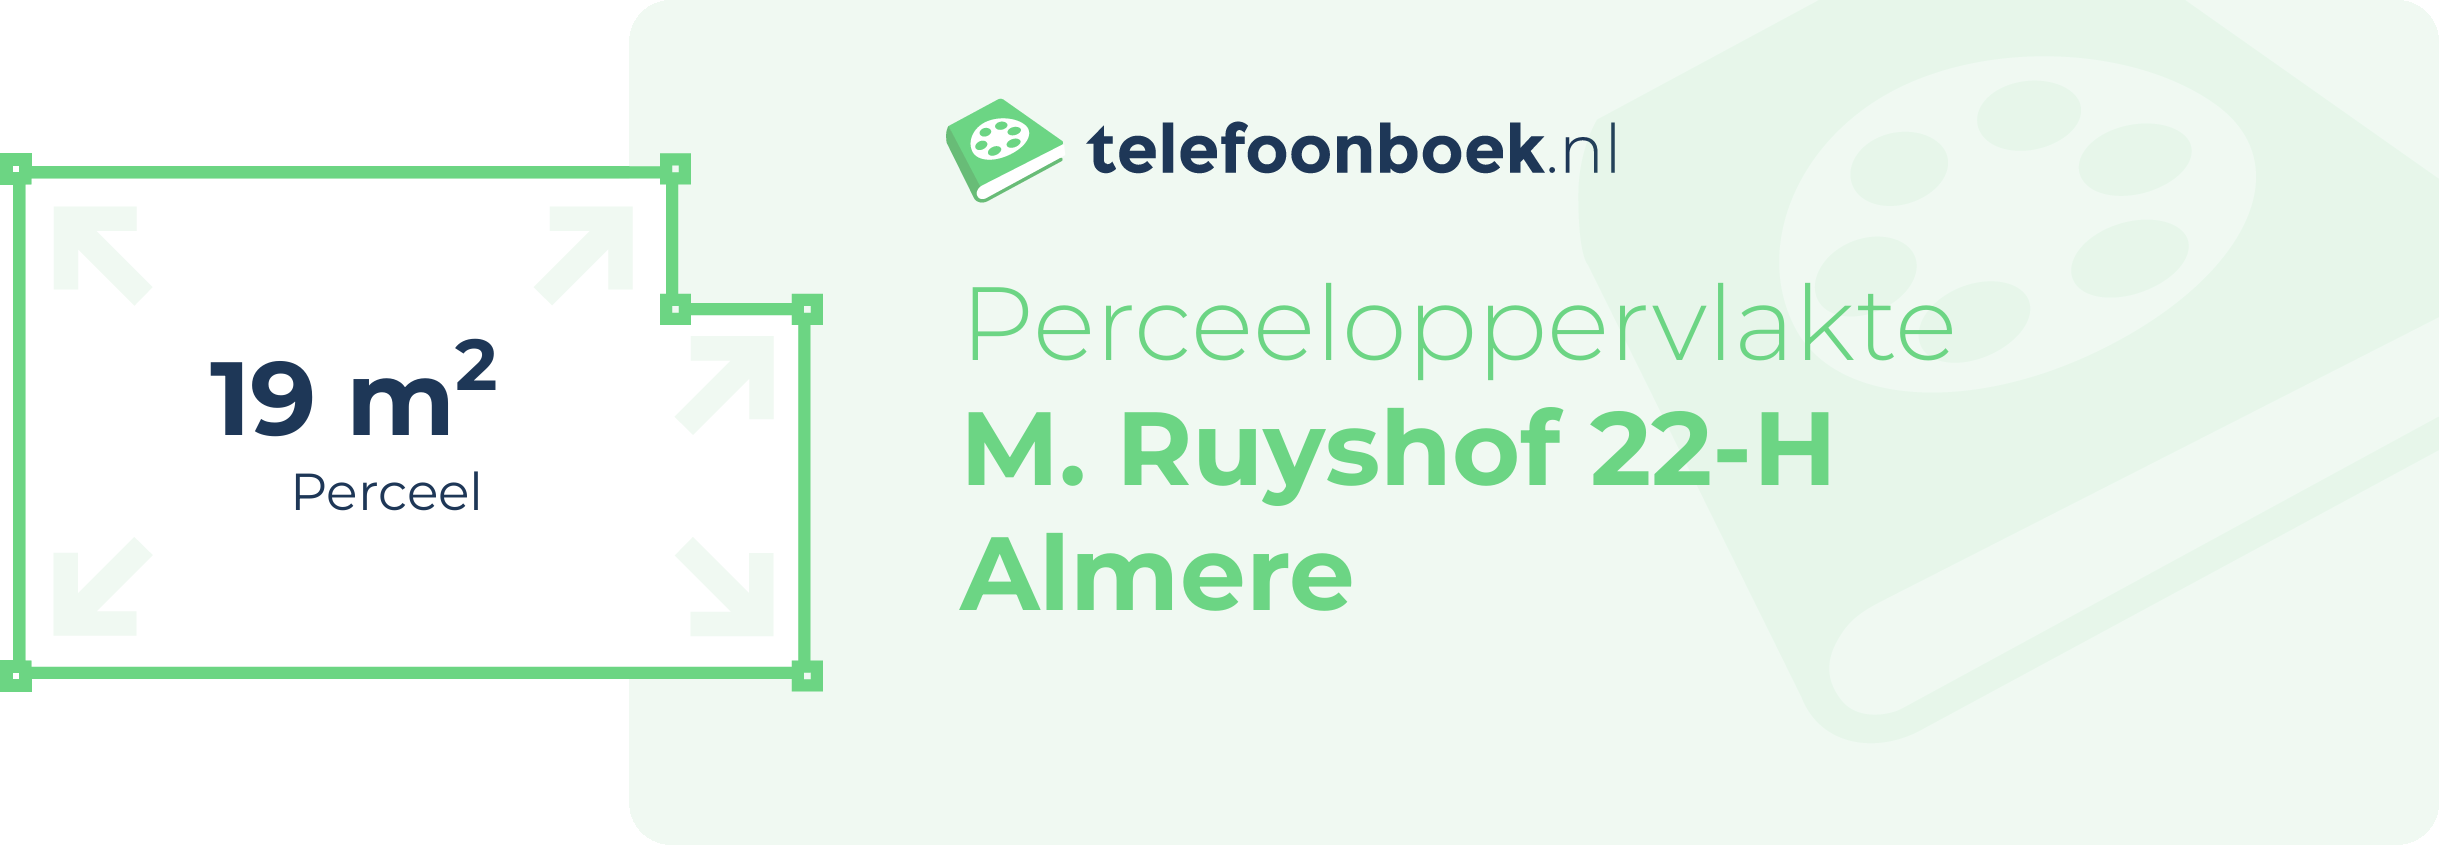 Perceeloppervlakte M. Ruyshof 22-H Almere